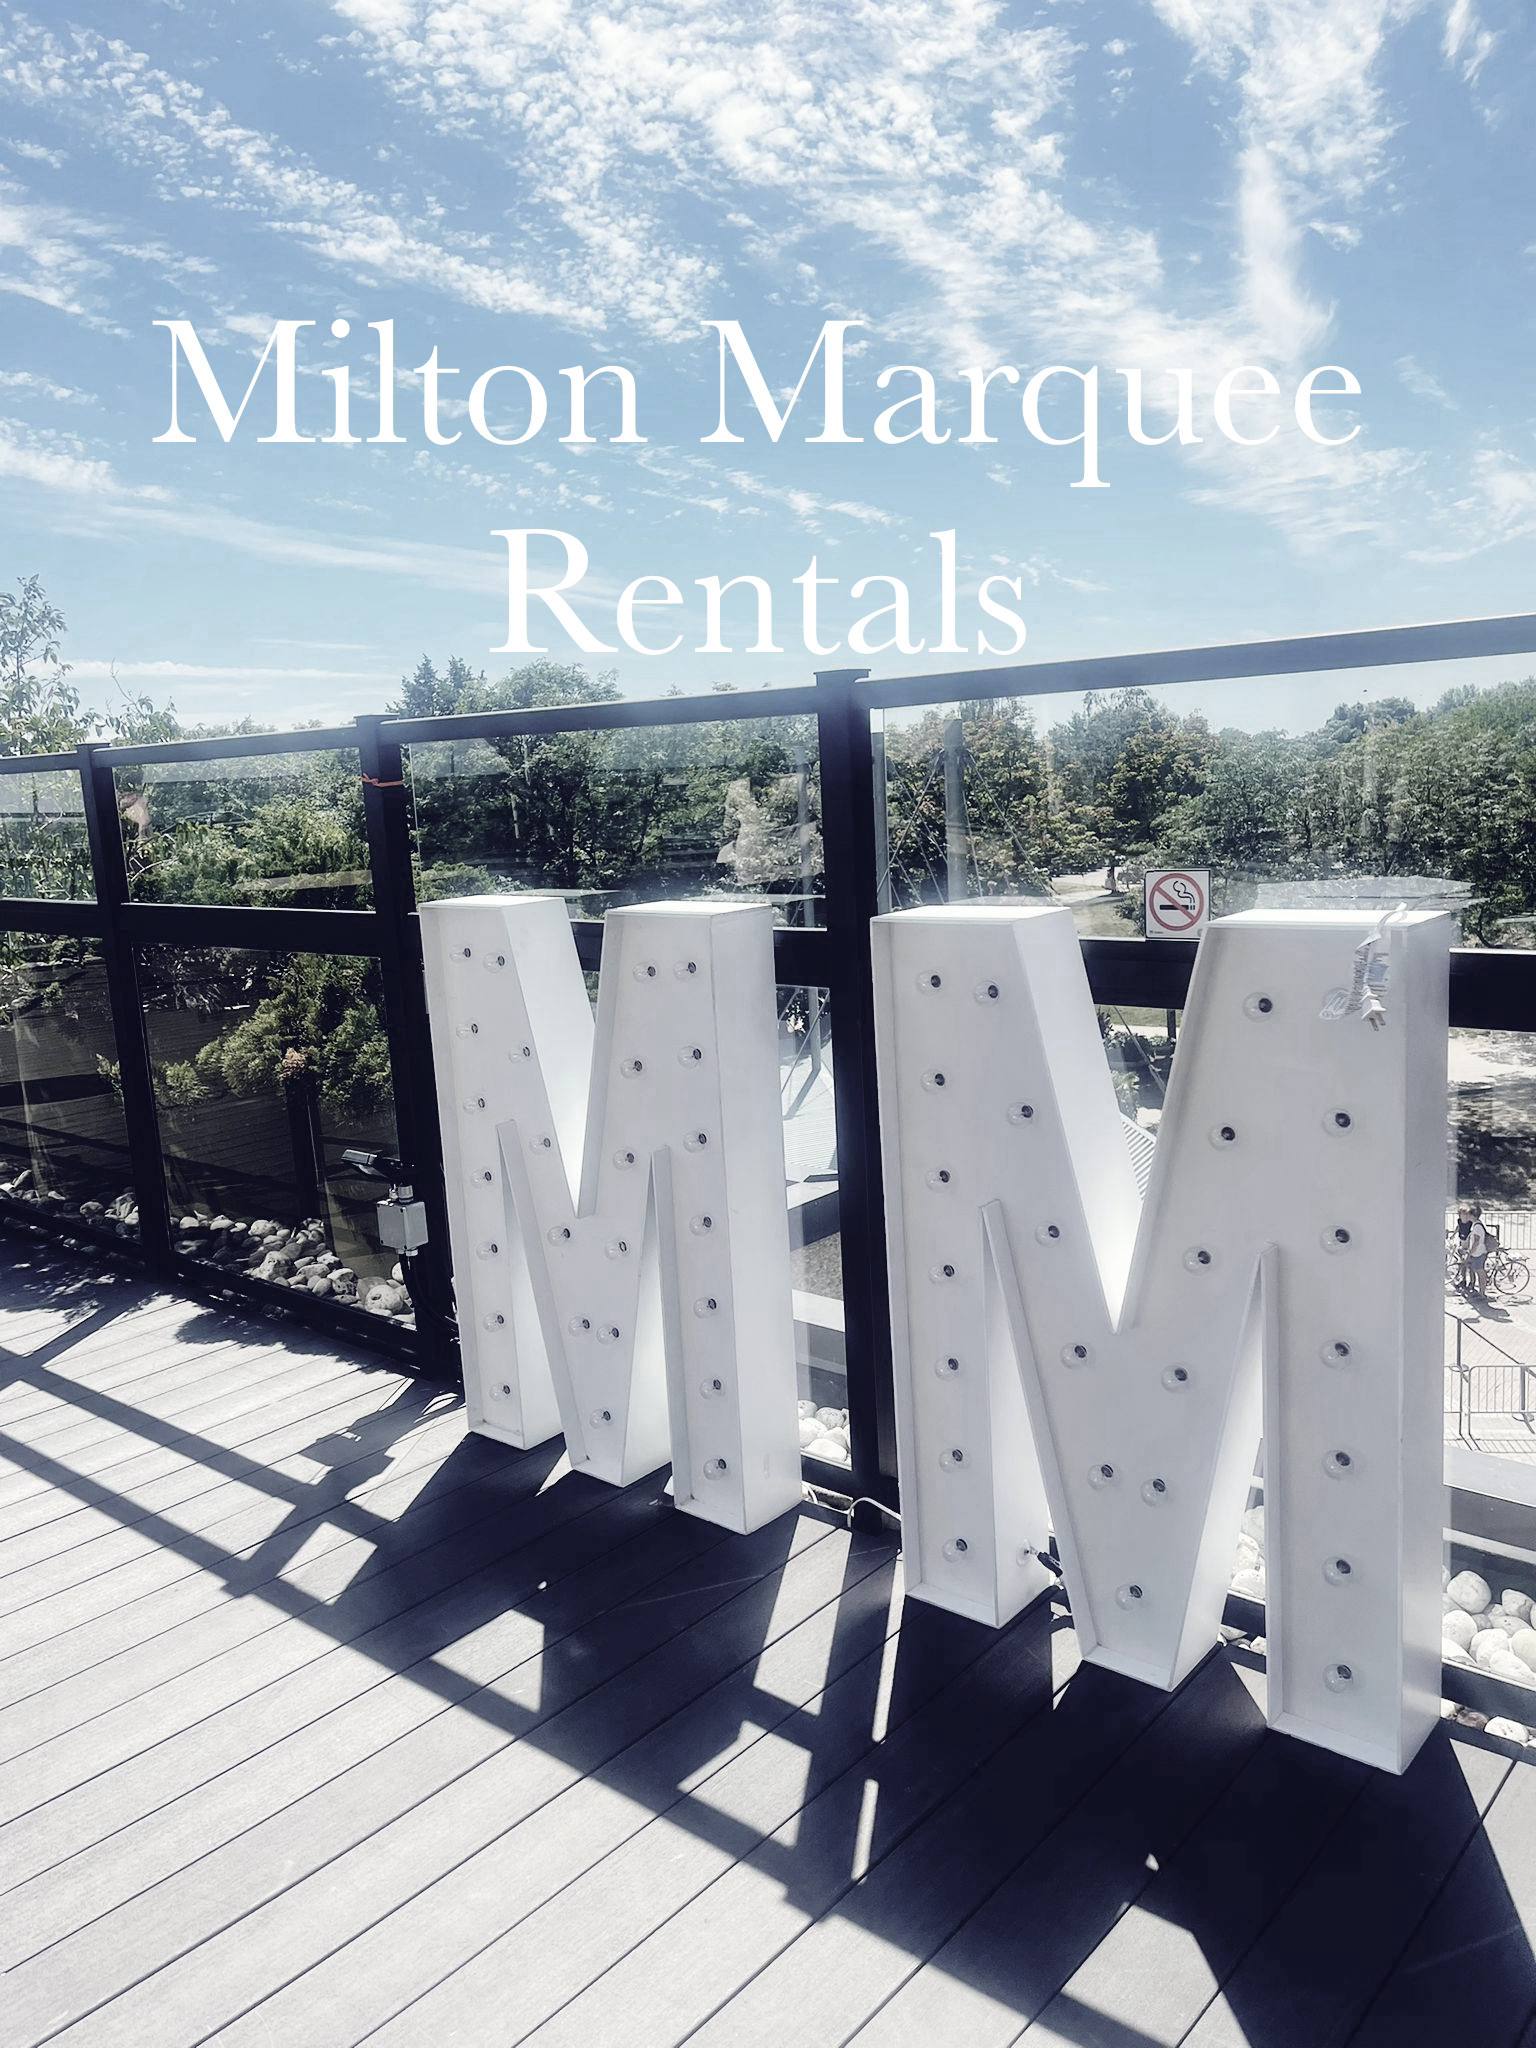 Milton Marquee rental company